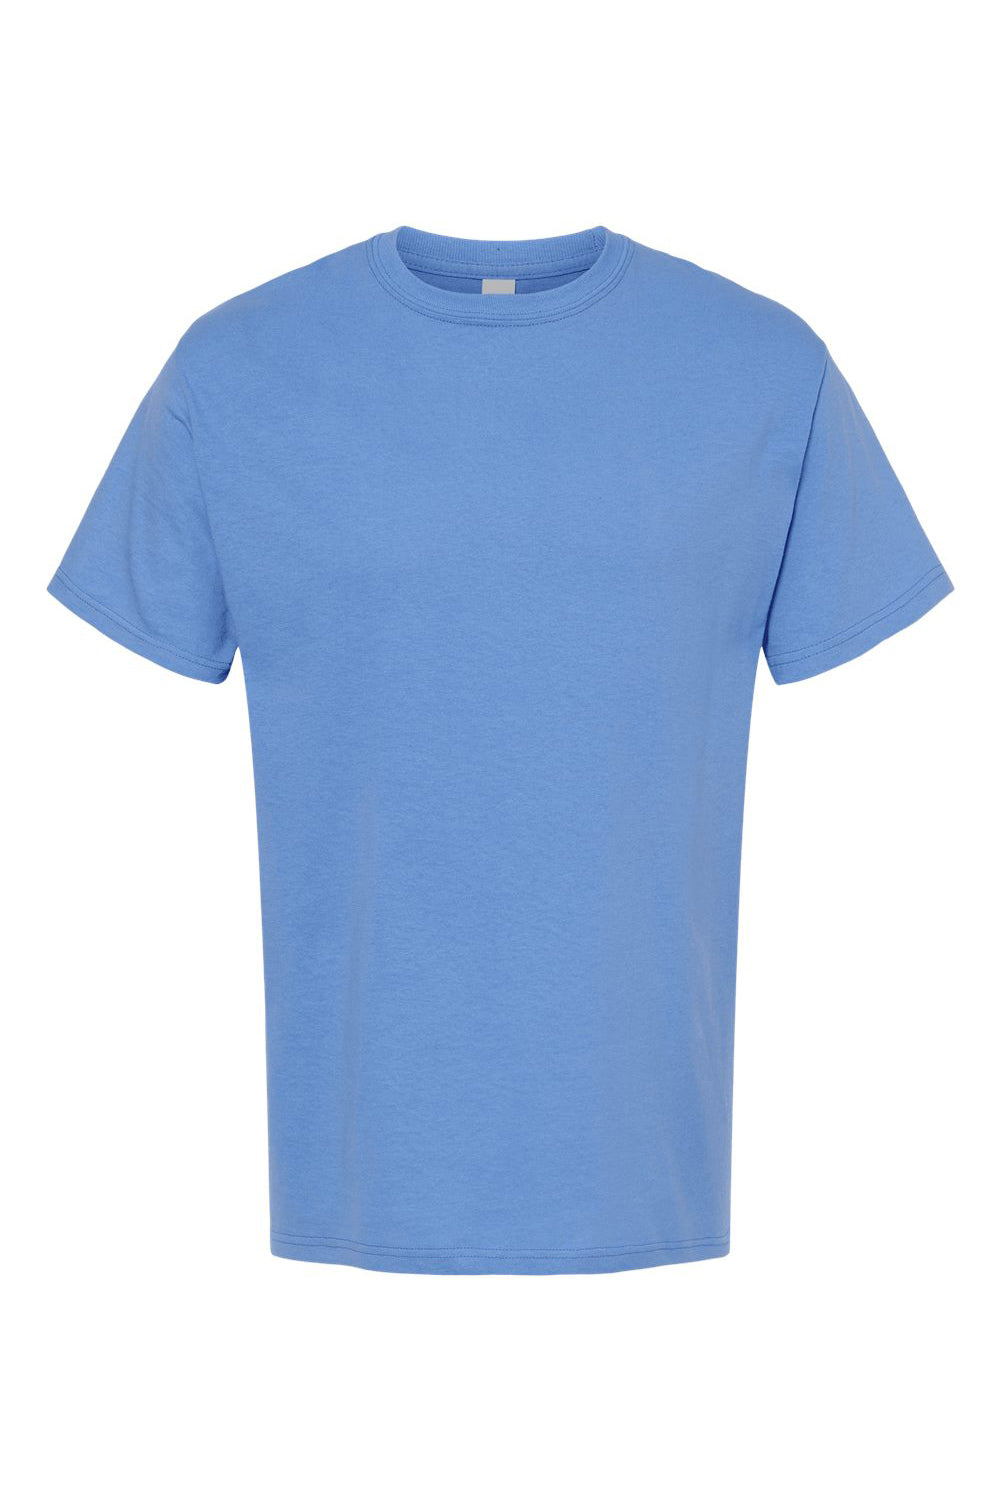 M&O 4800 Mens Gold Soft Touch Short Sleeve Crewneck T-Shirt Carolina Blue Flat Front